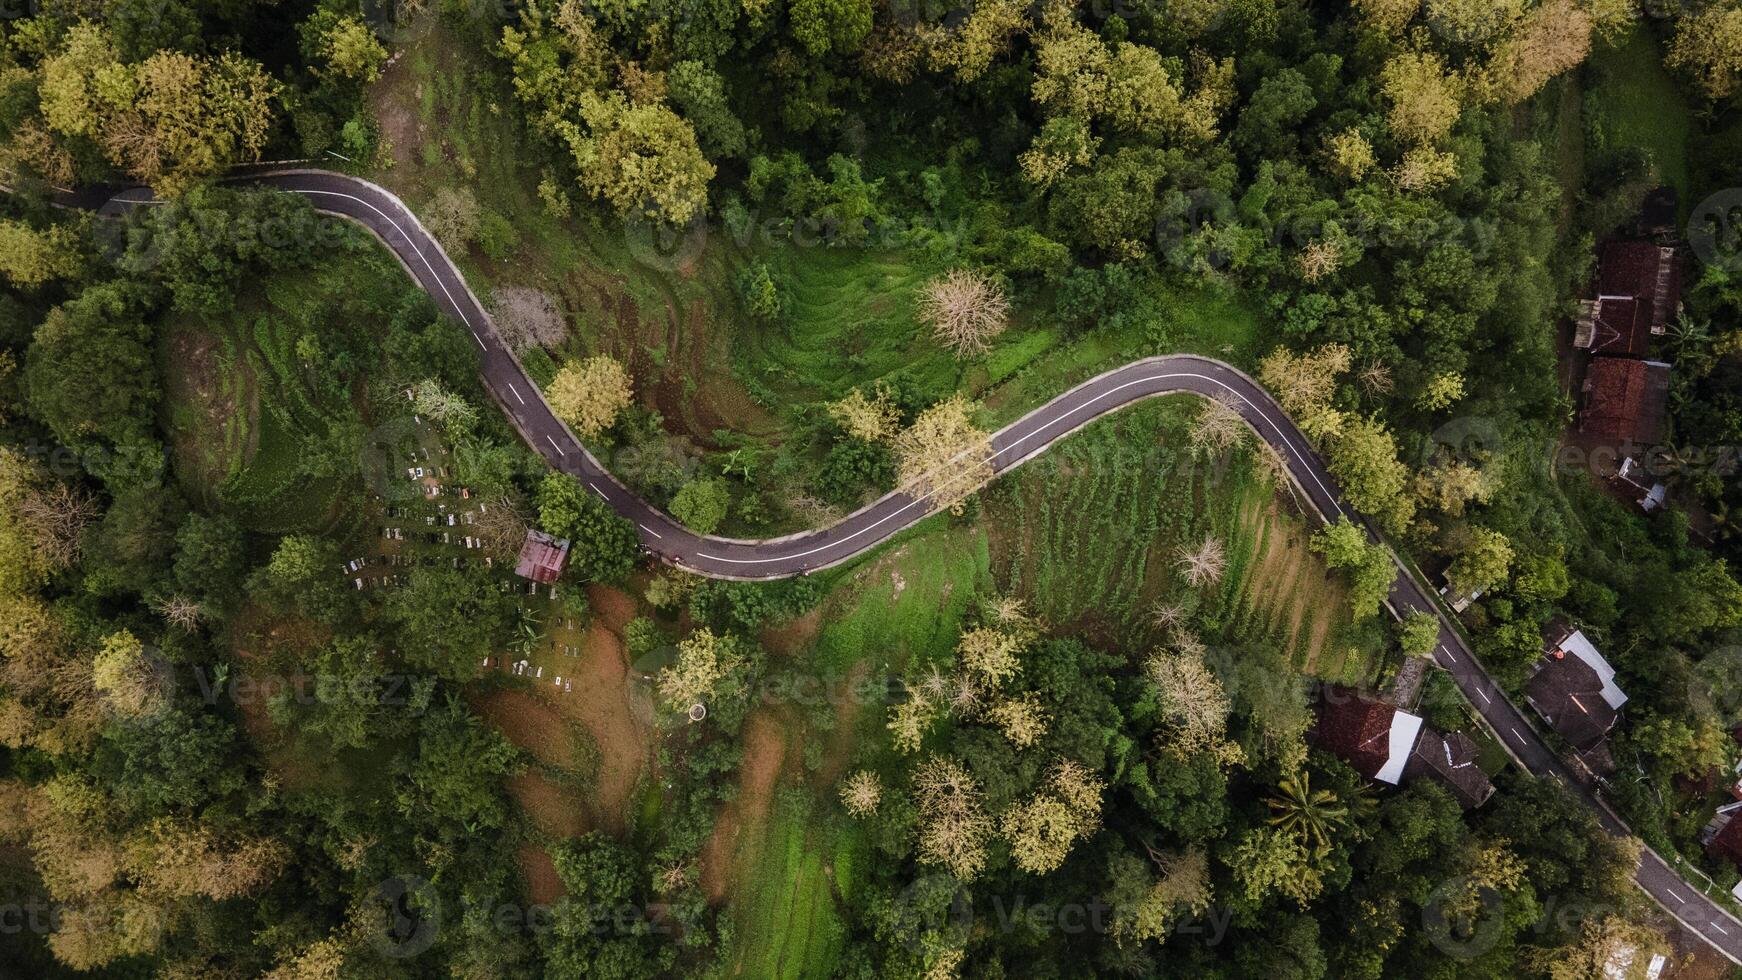 antenne visie van asfalt weg kronkelend tussen bossen en mooi groen rijst- velden. foto